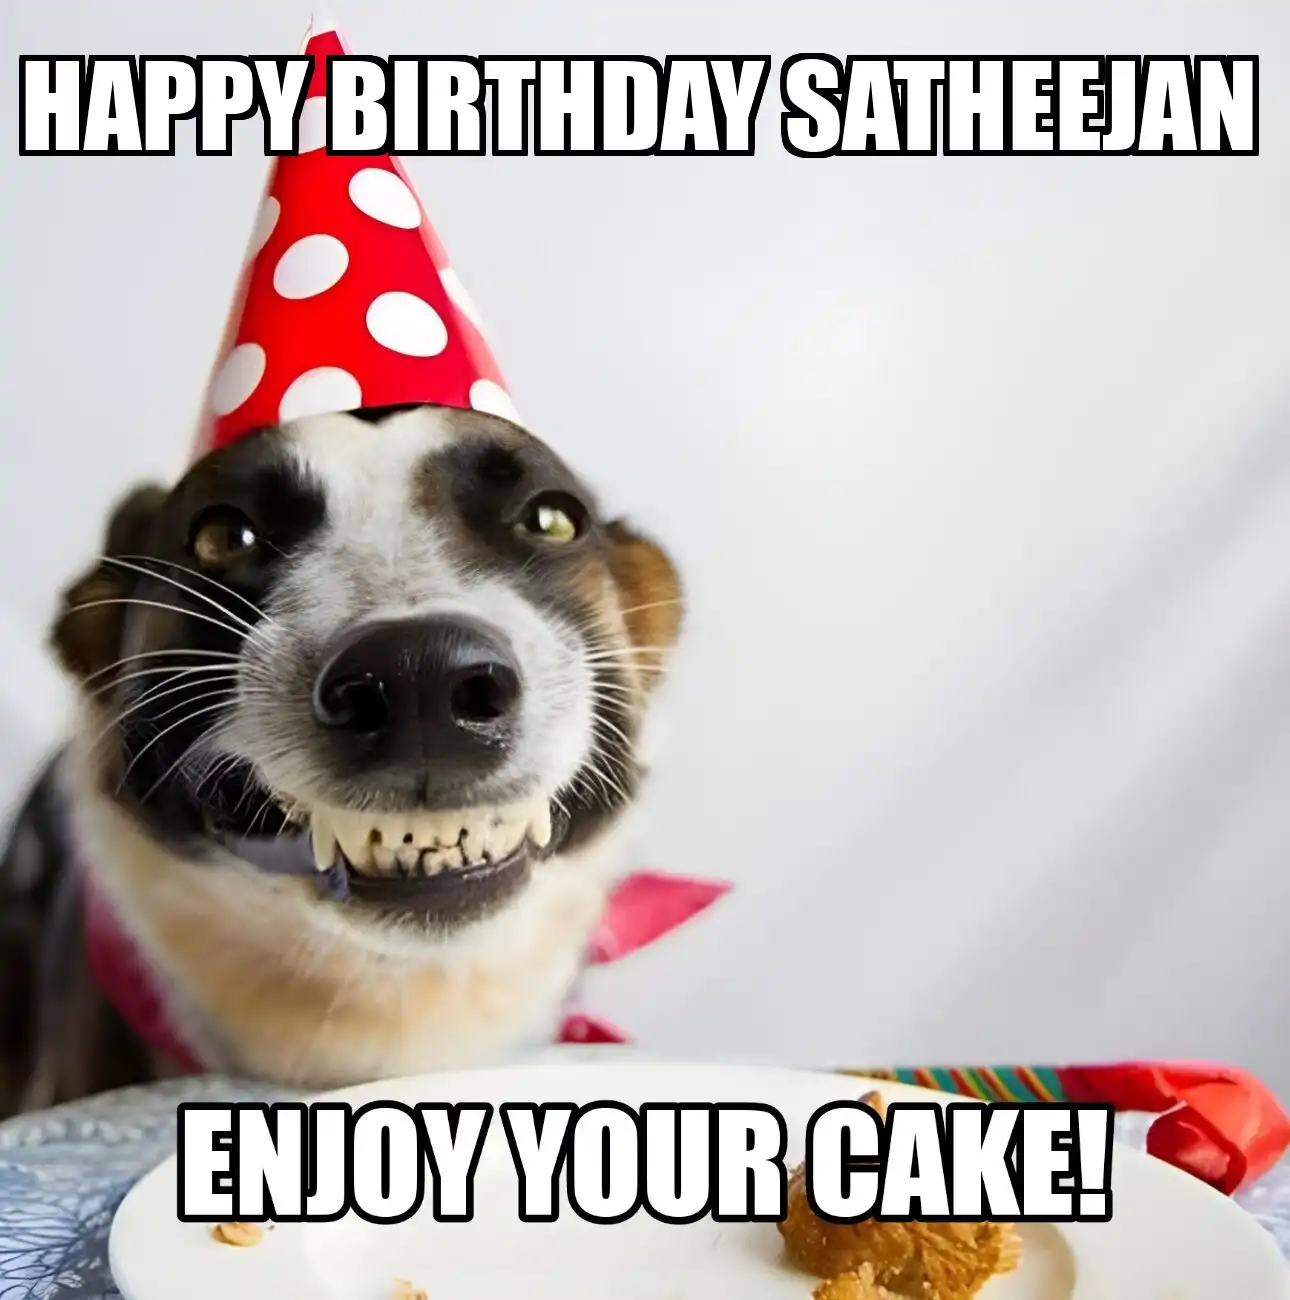 Happy Birthday Satheejan Enjoy Your Cake Dog Meme